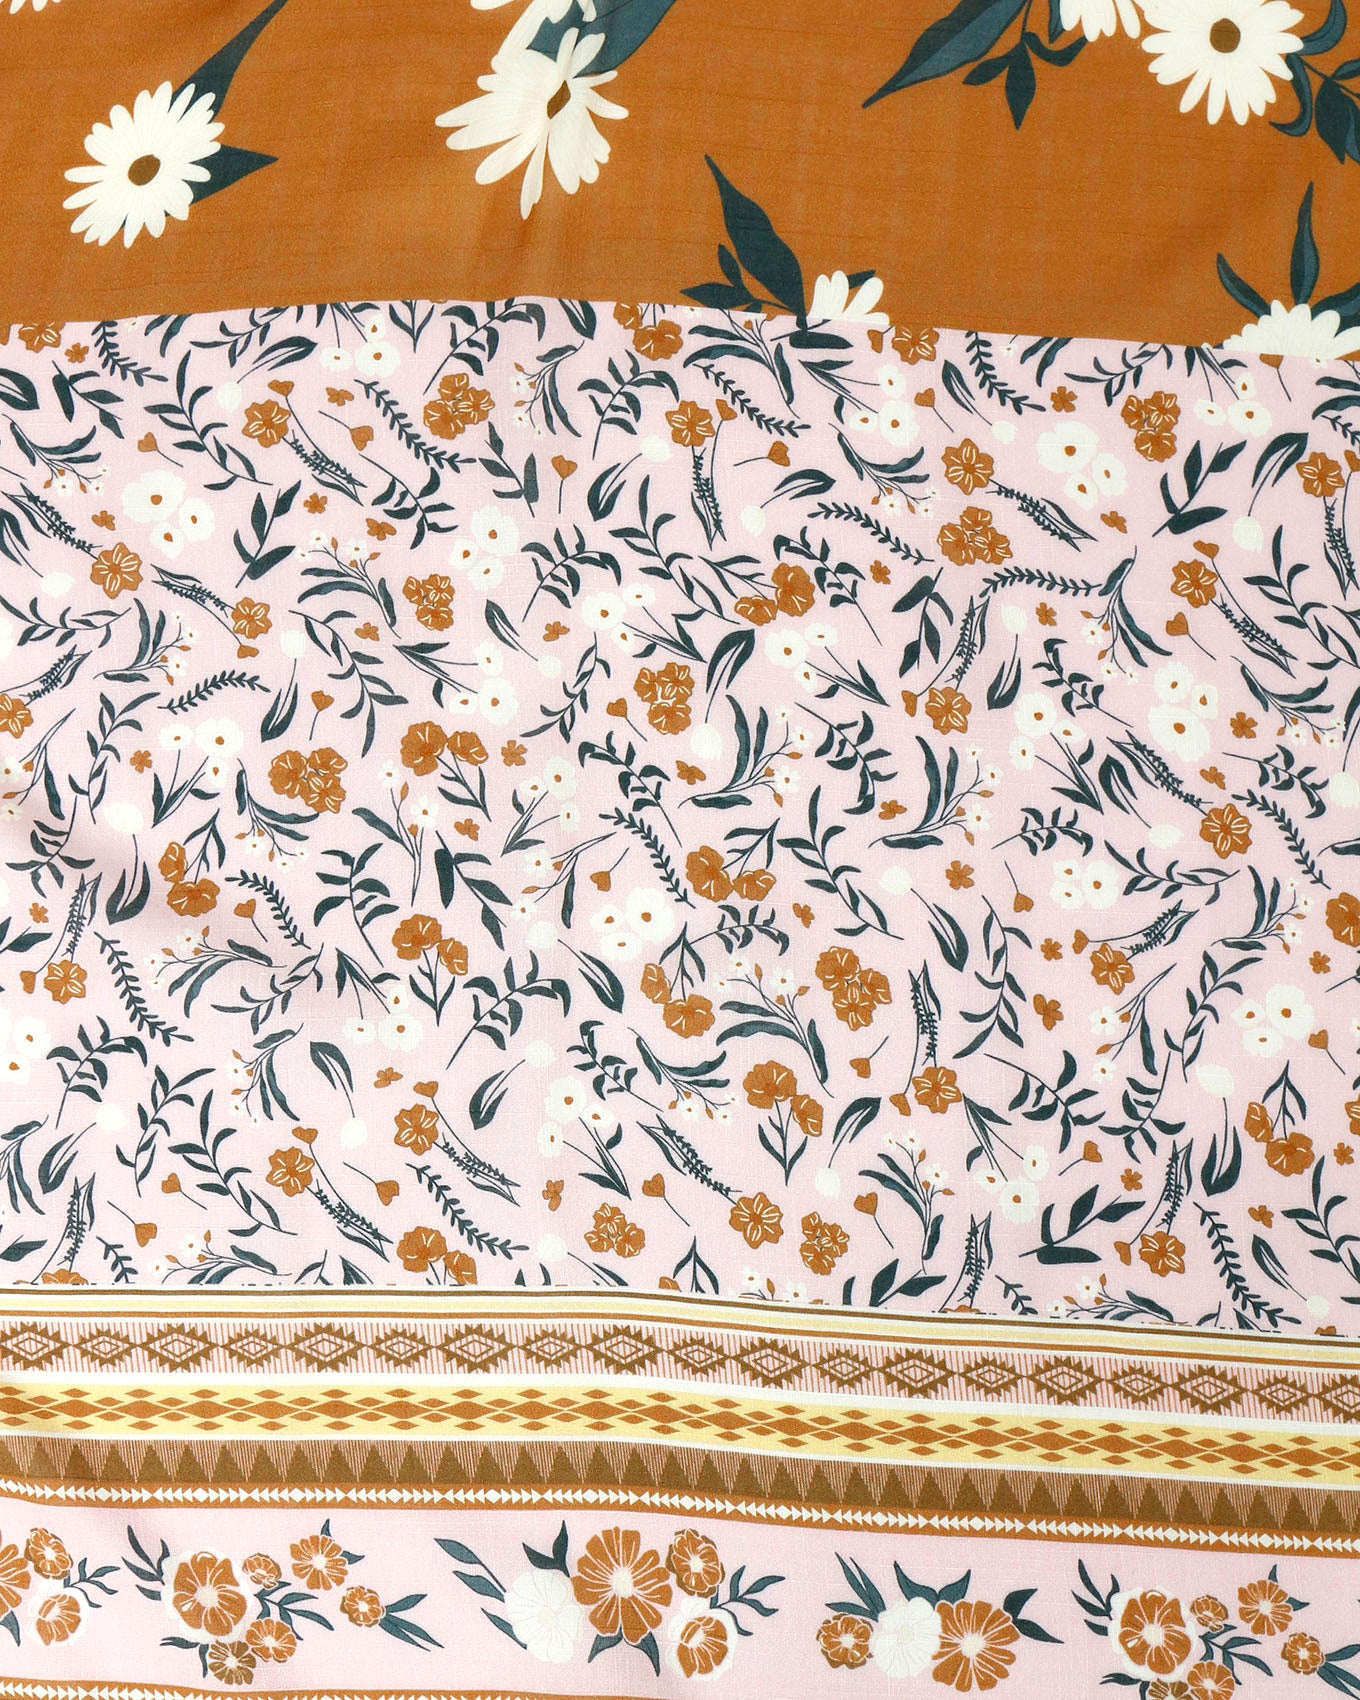 Fabric view of Floral Boho Duster Kimono